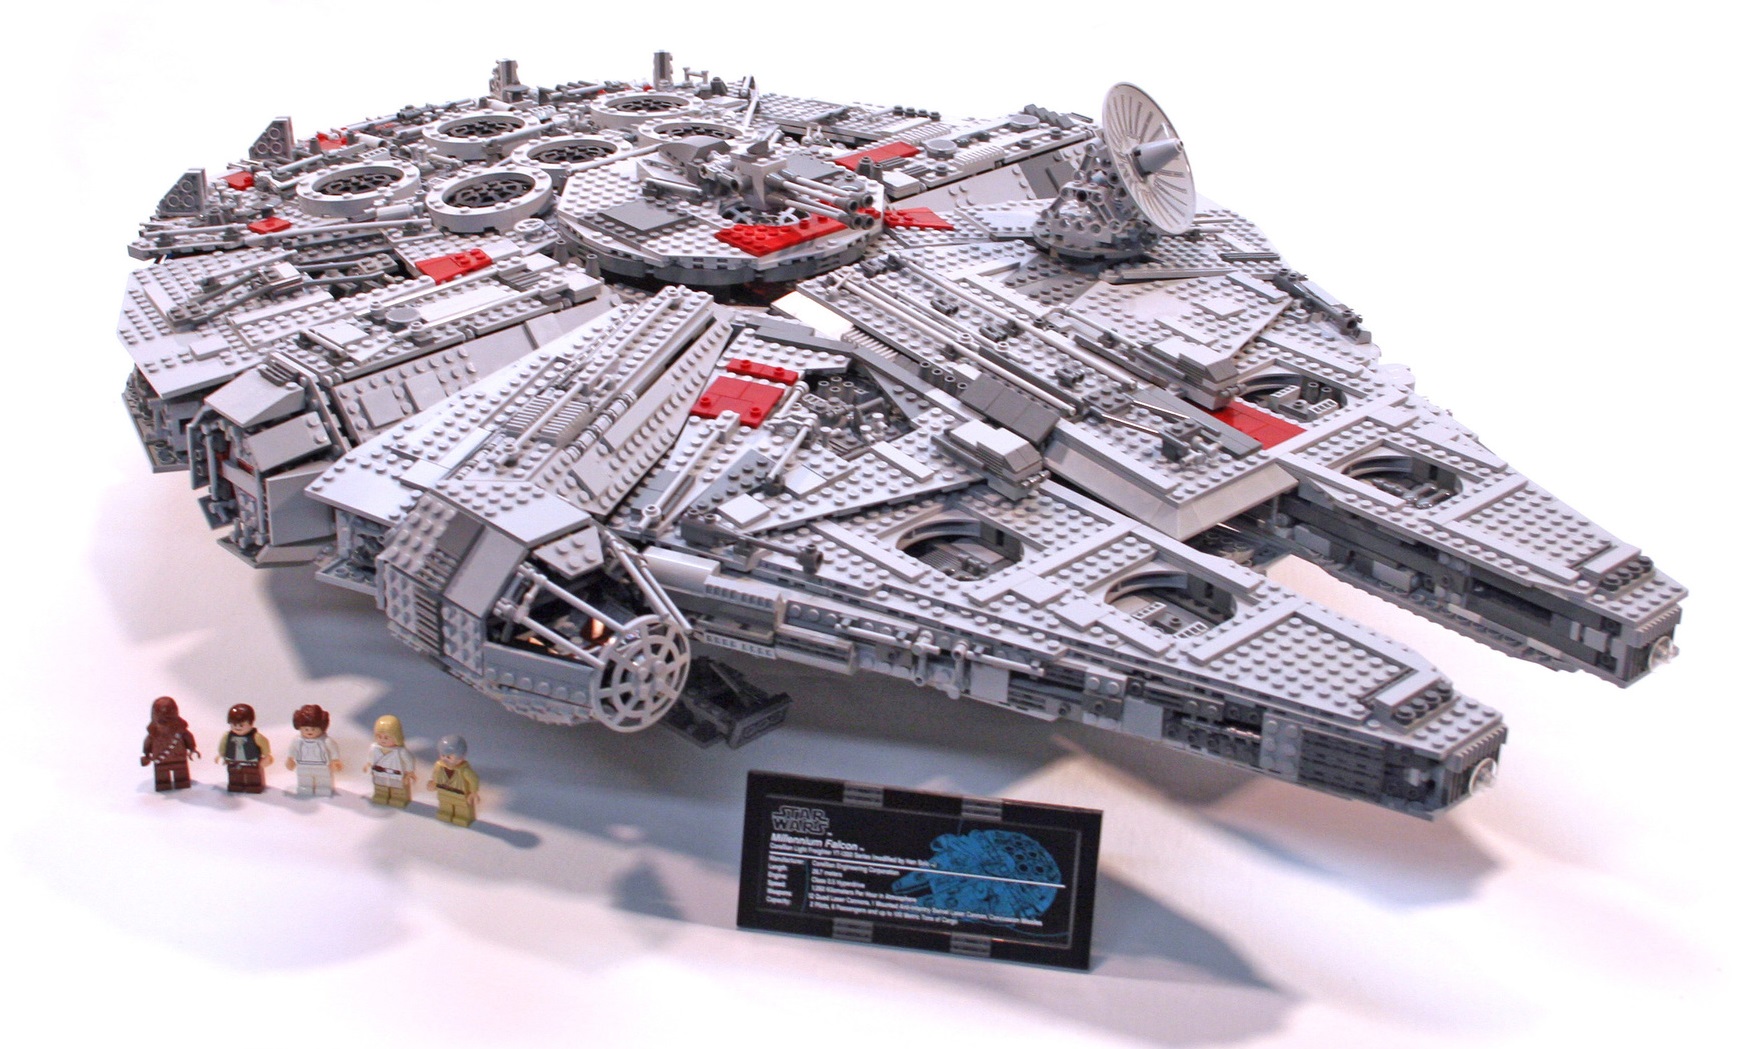 LEGO 10197 Ultimate Collector's Millennium Falcon